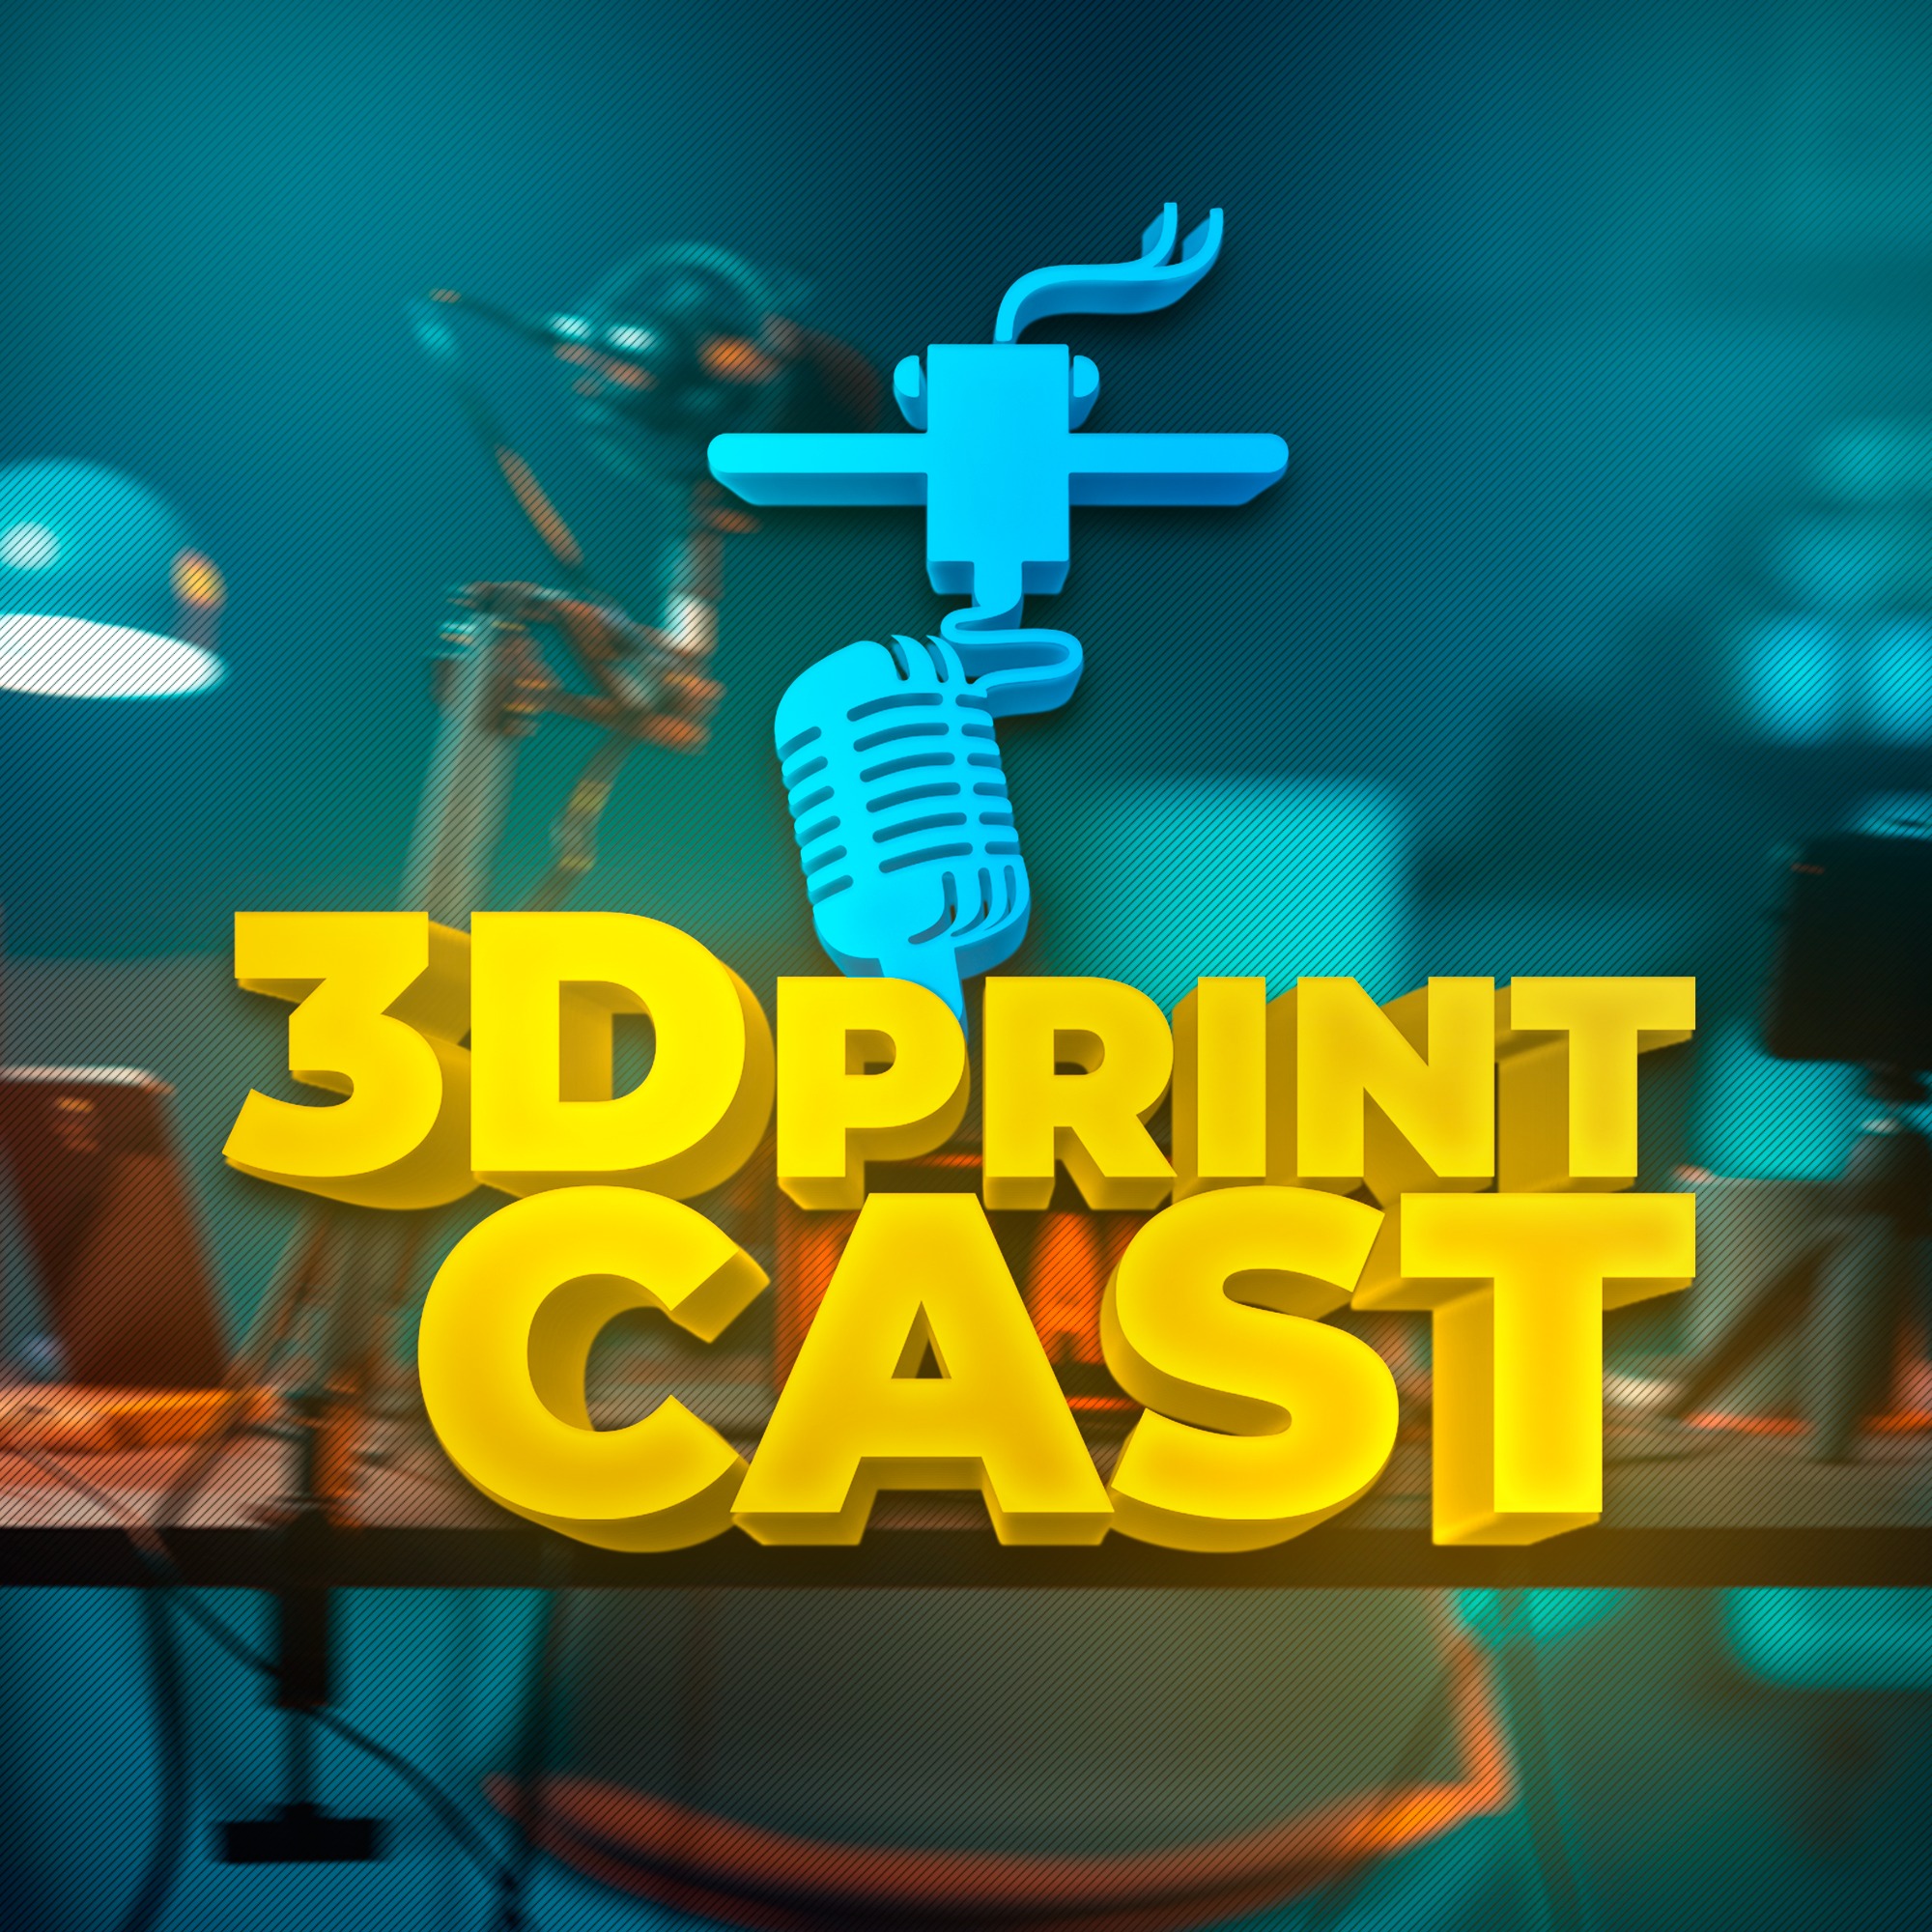 3D PRINT CAST